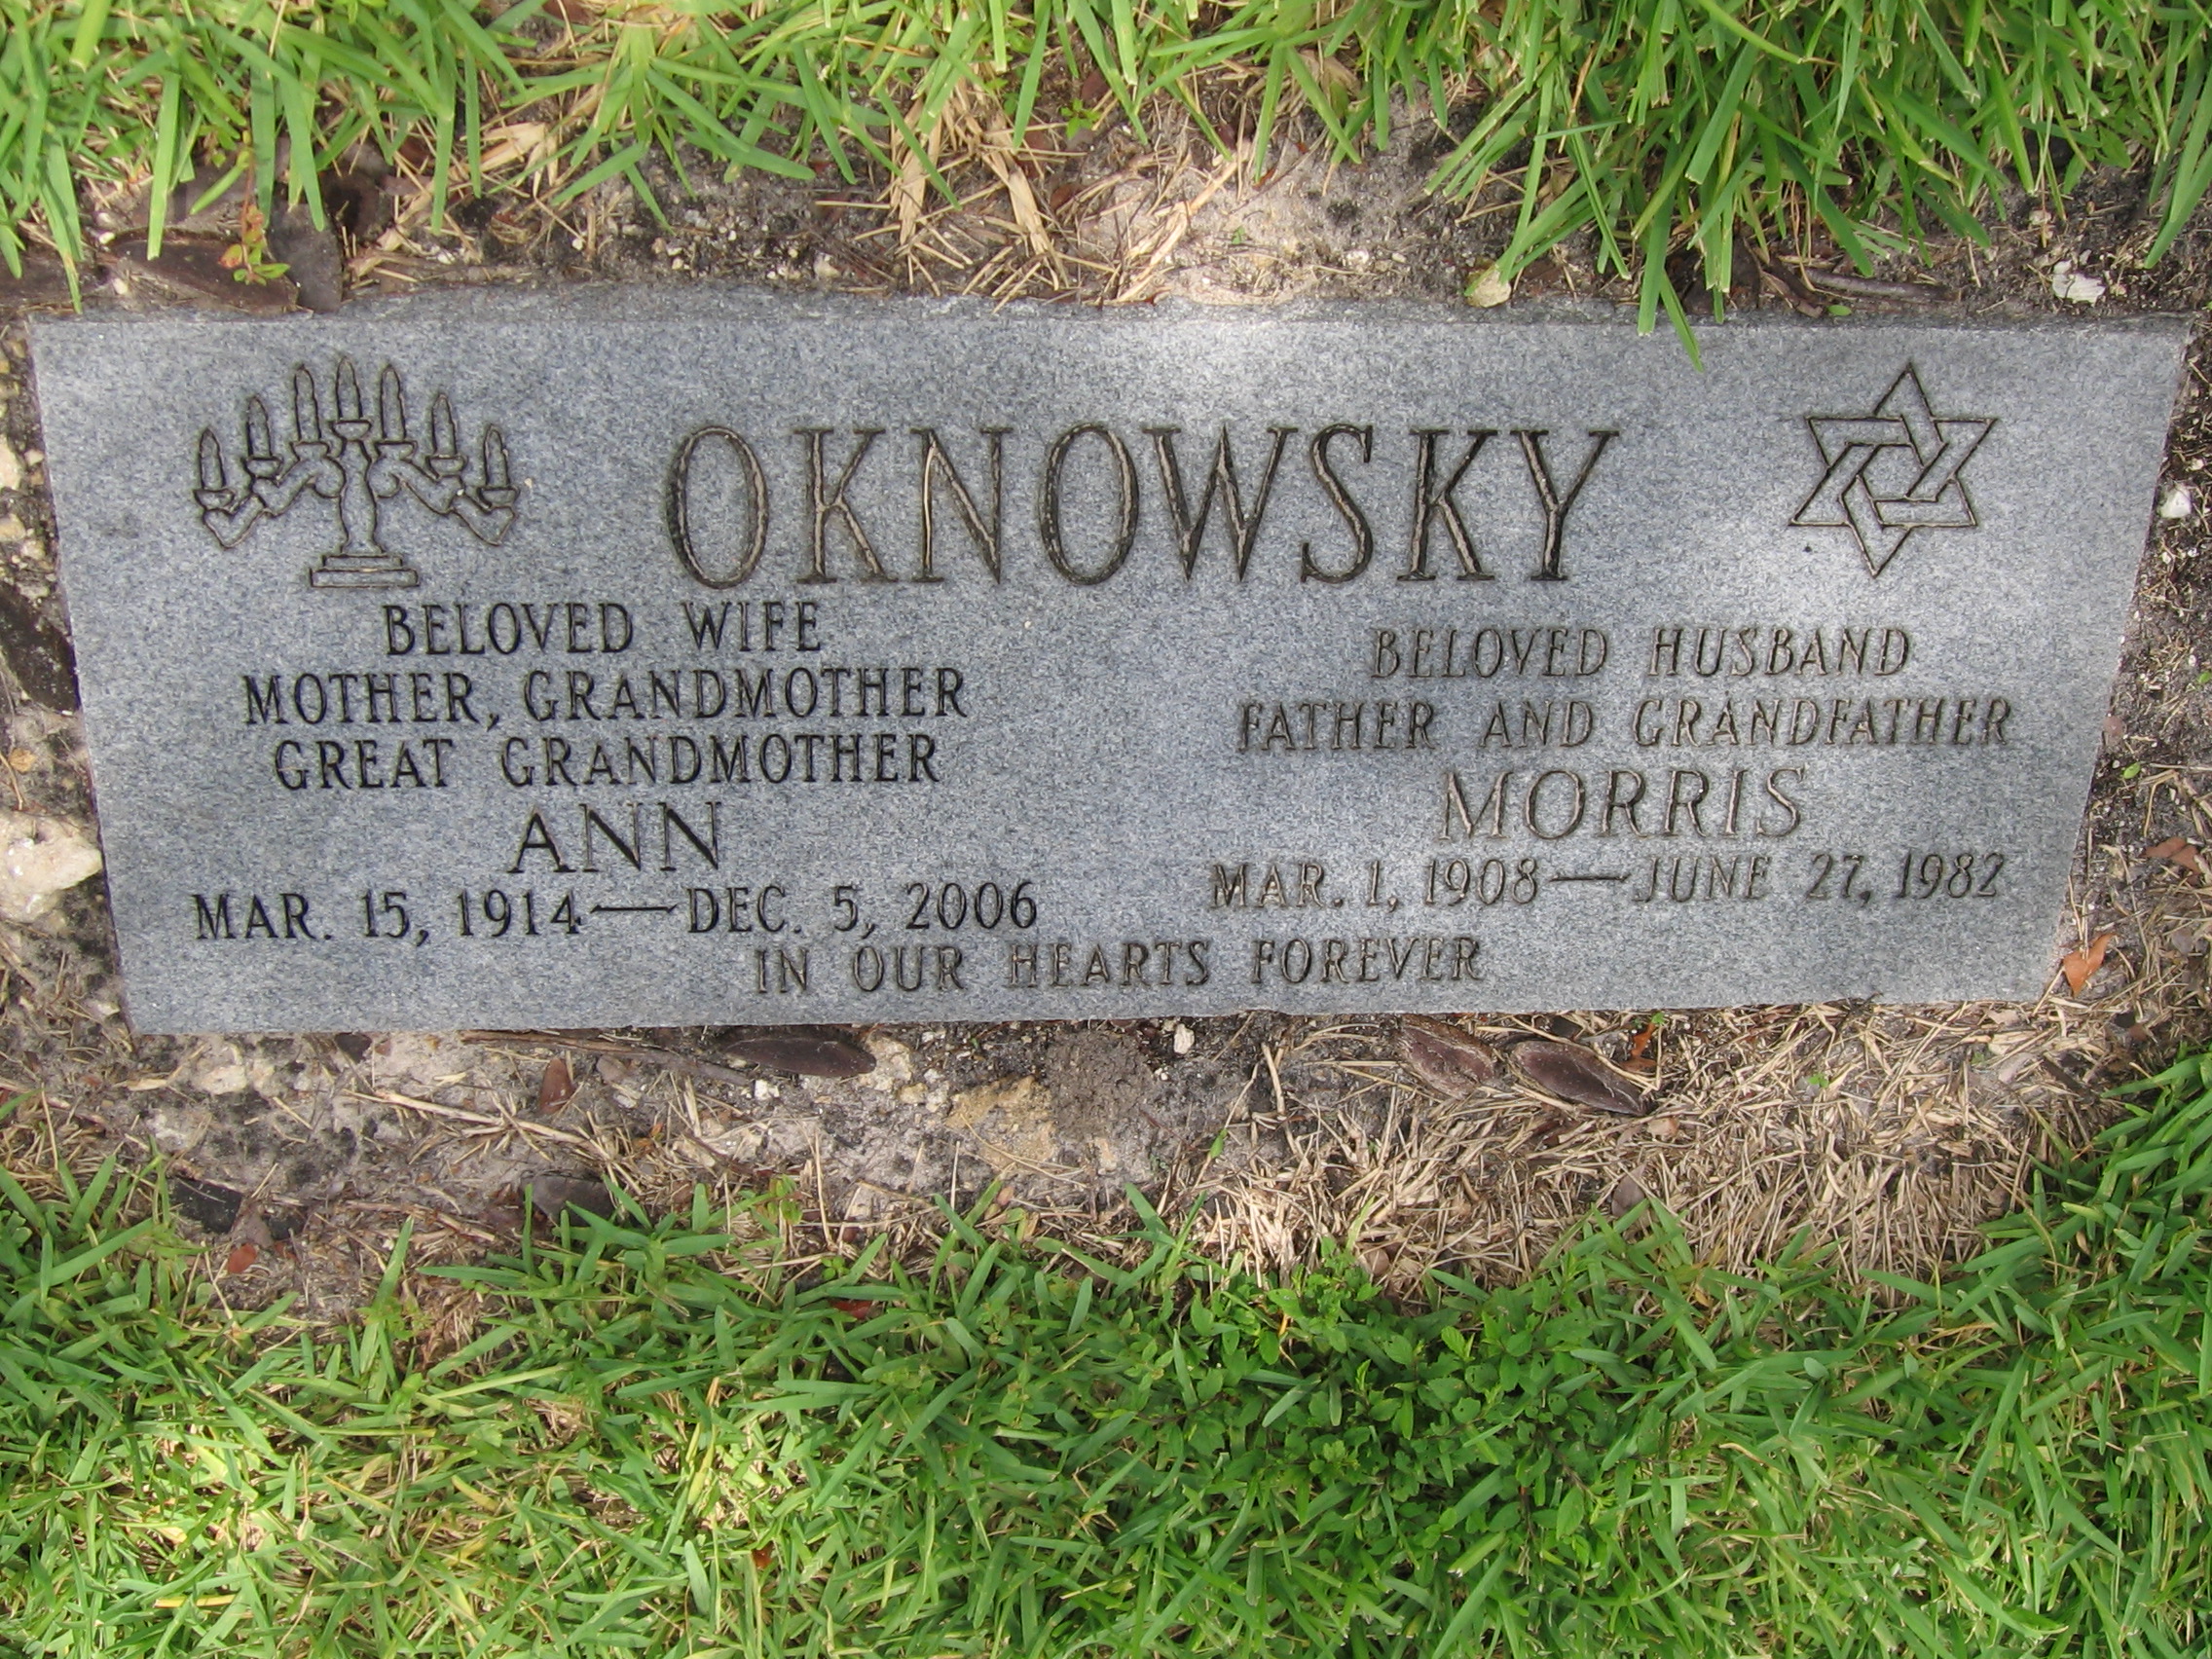 Morris Oknowsky